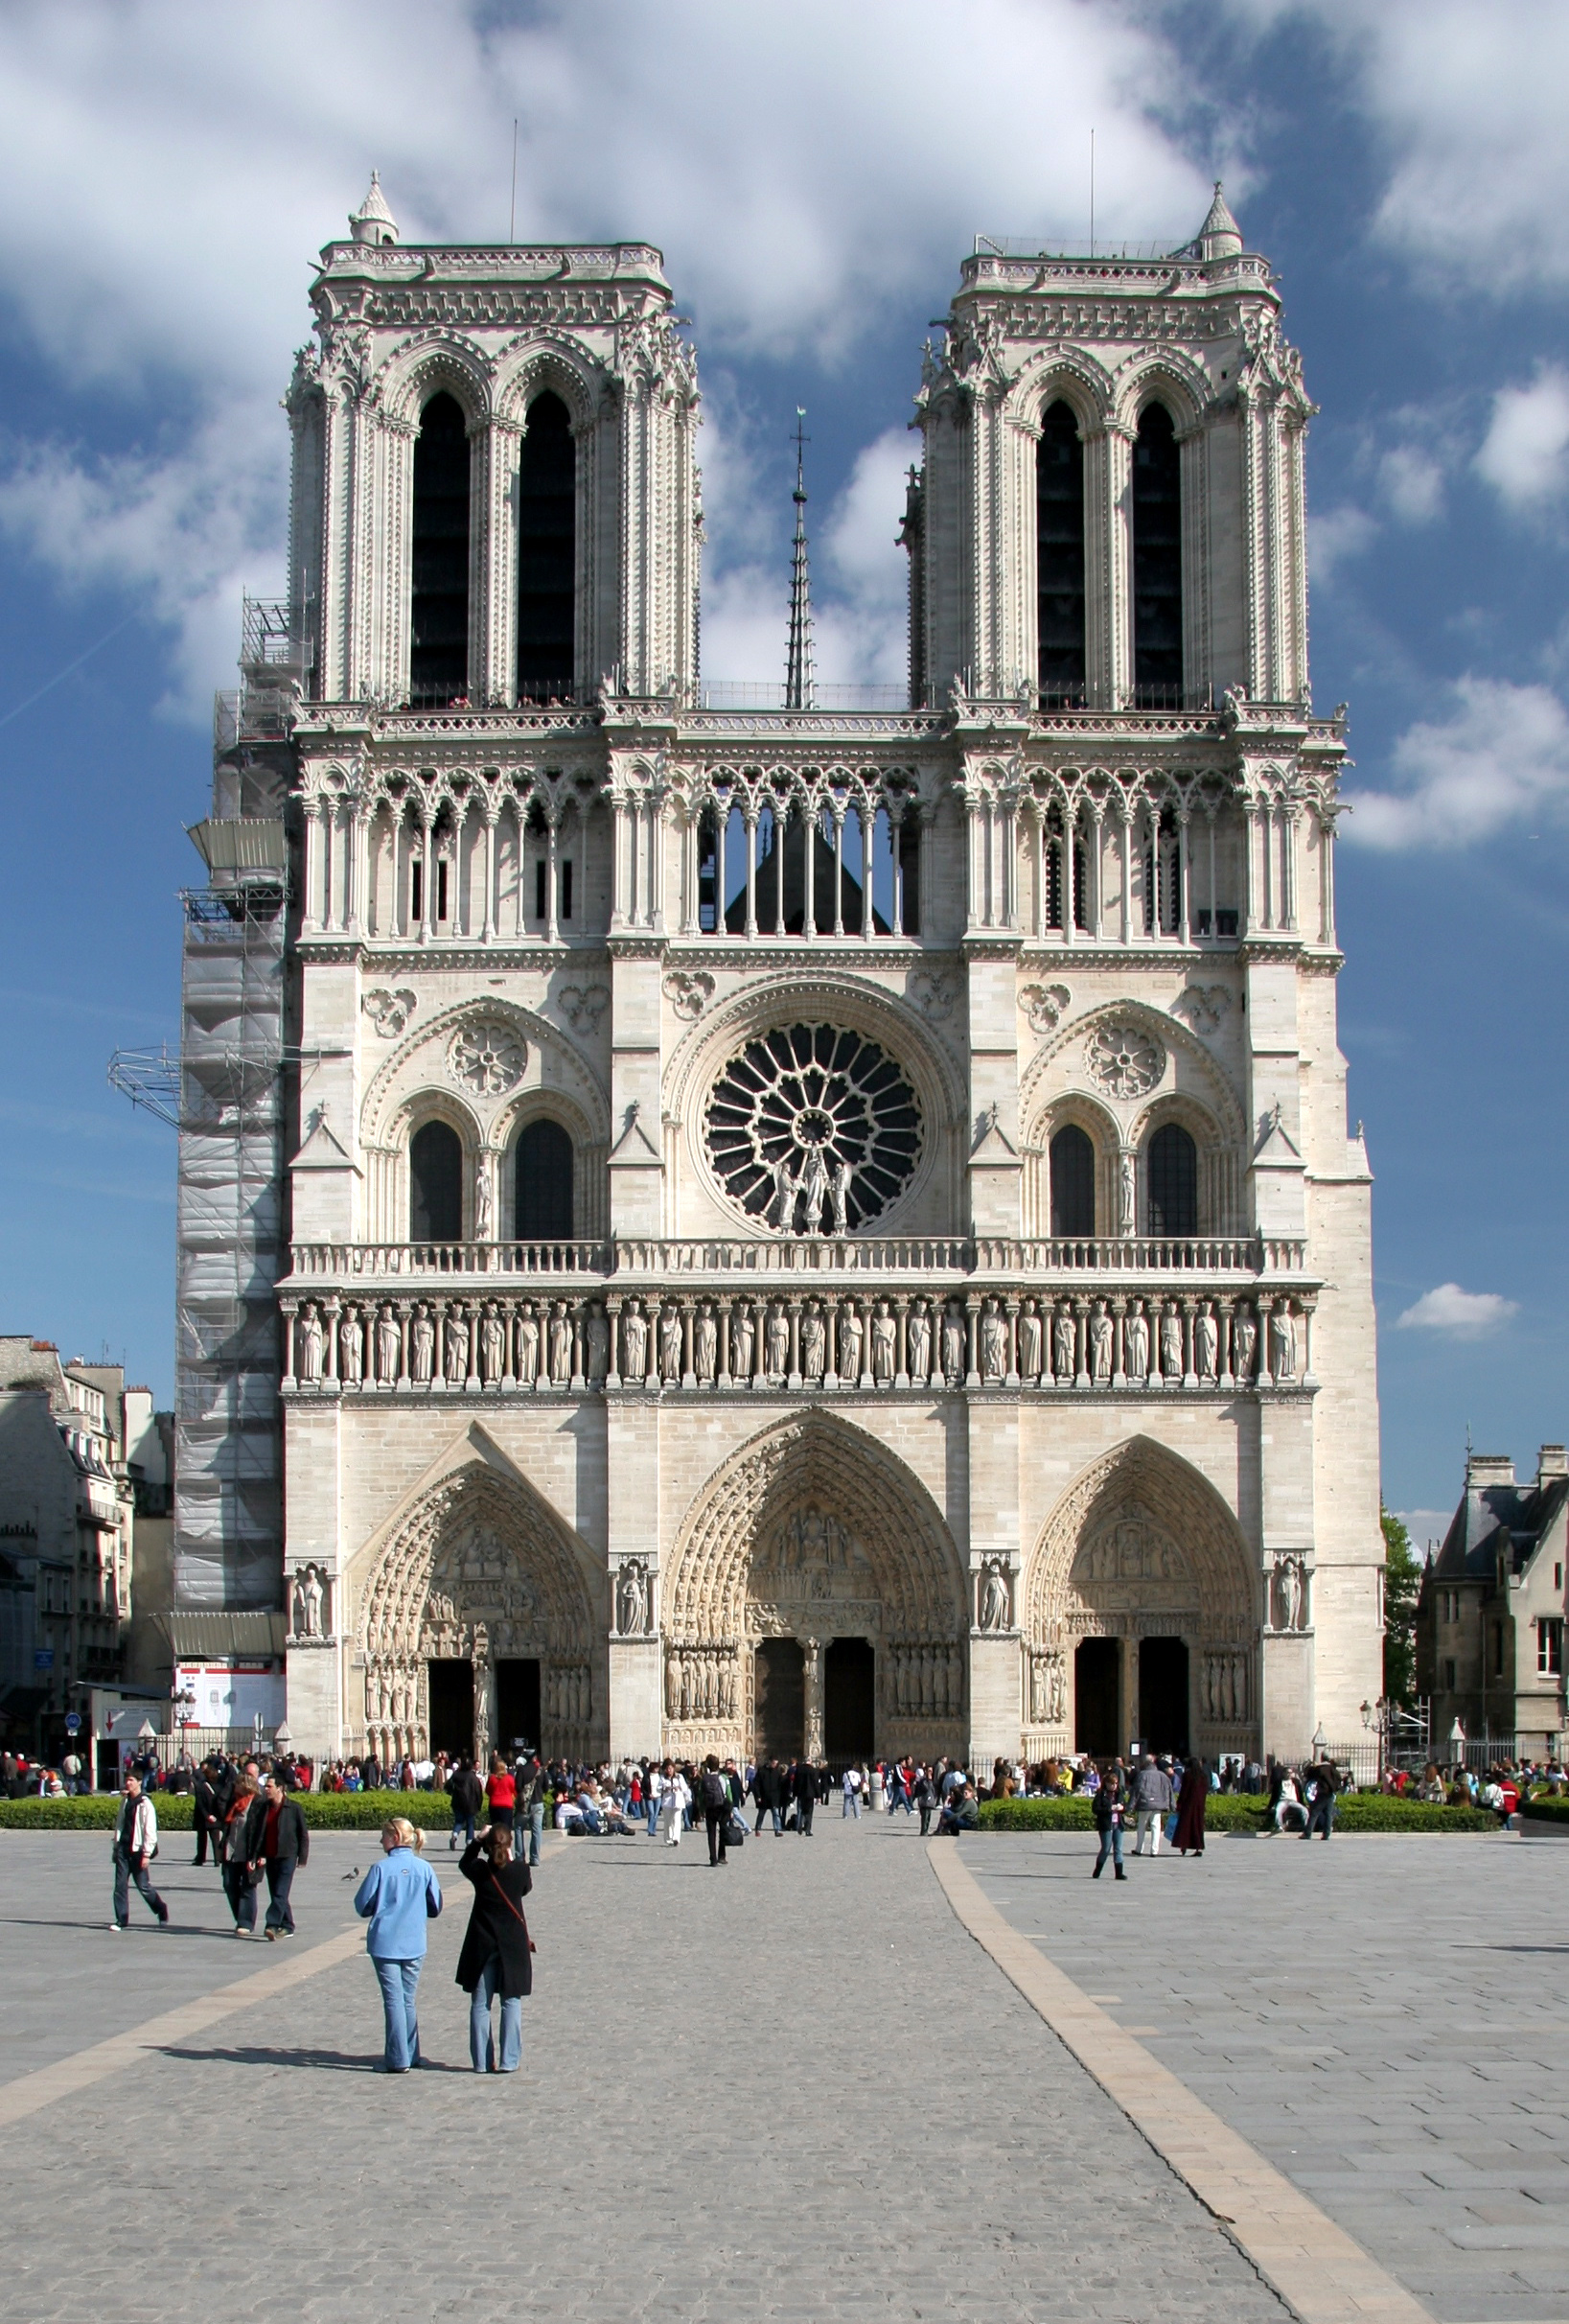 File:Facade-notre-dame-paris-ciel-bleu.JPG - Wikimedia Commons